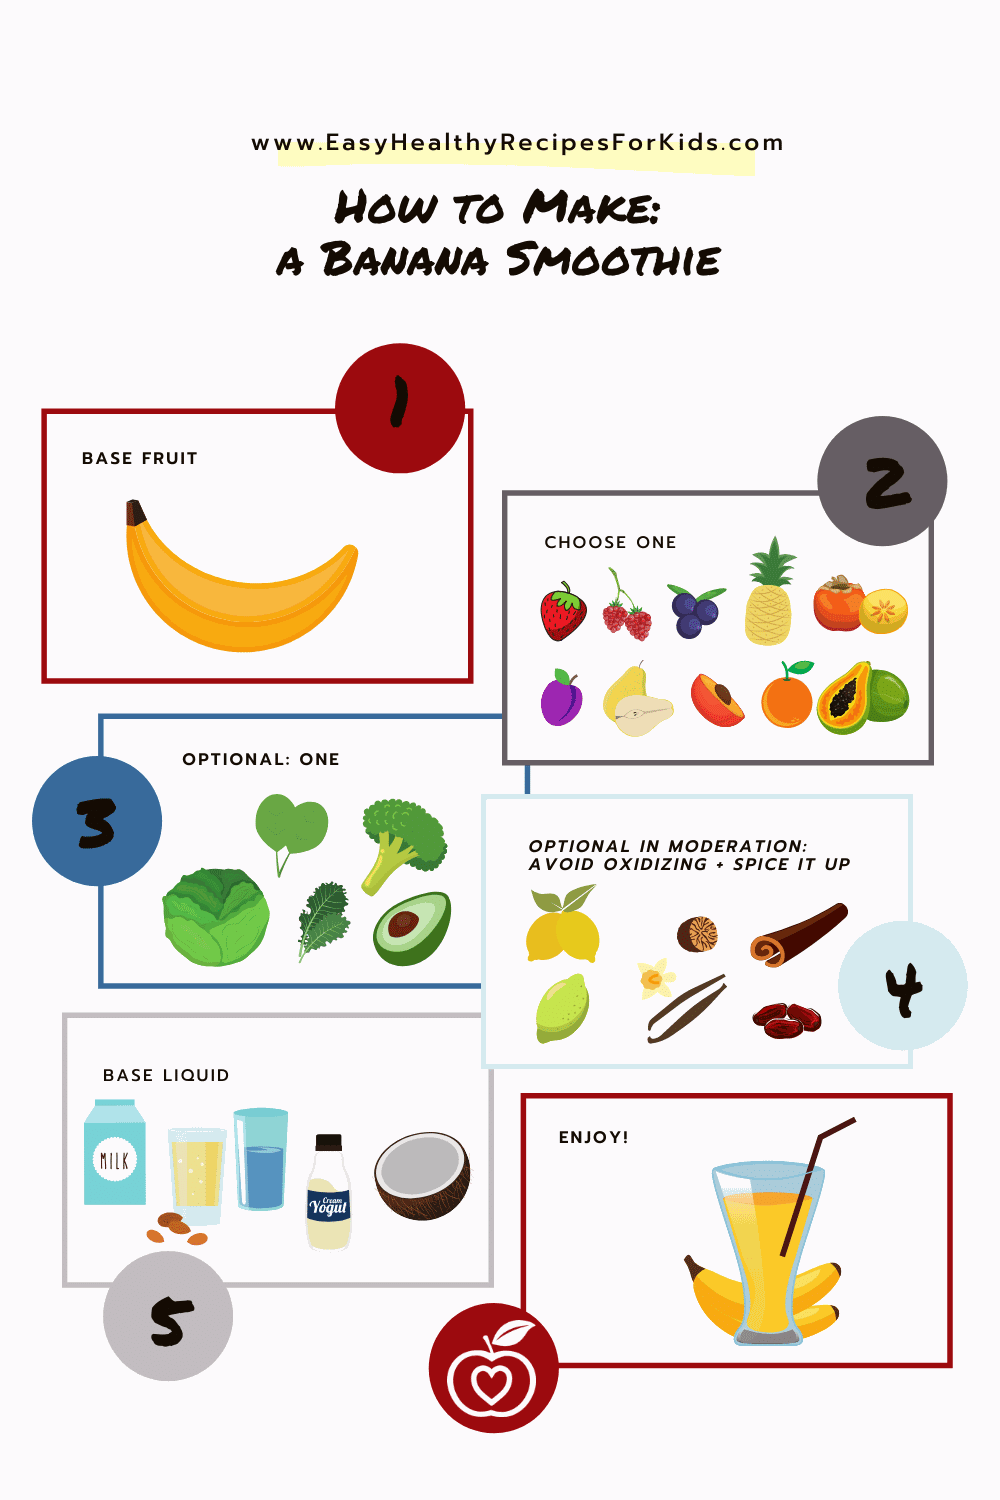 How to Make a Smoothie?